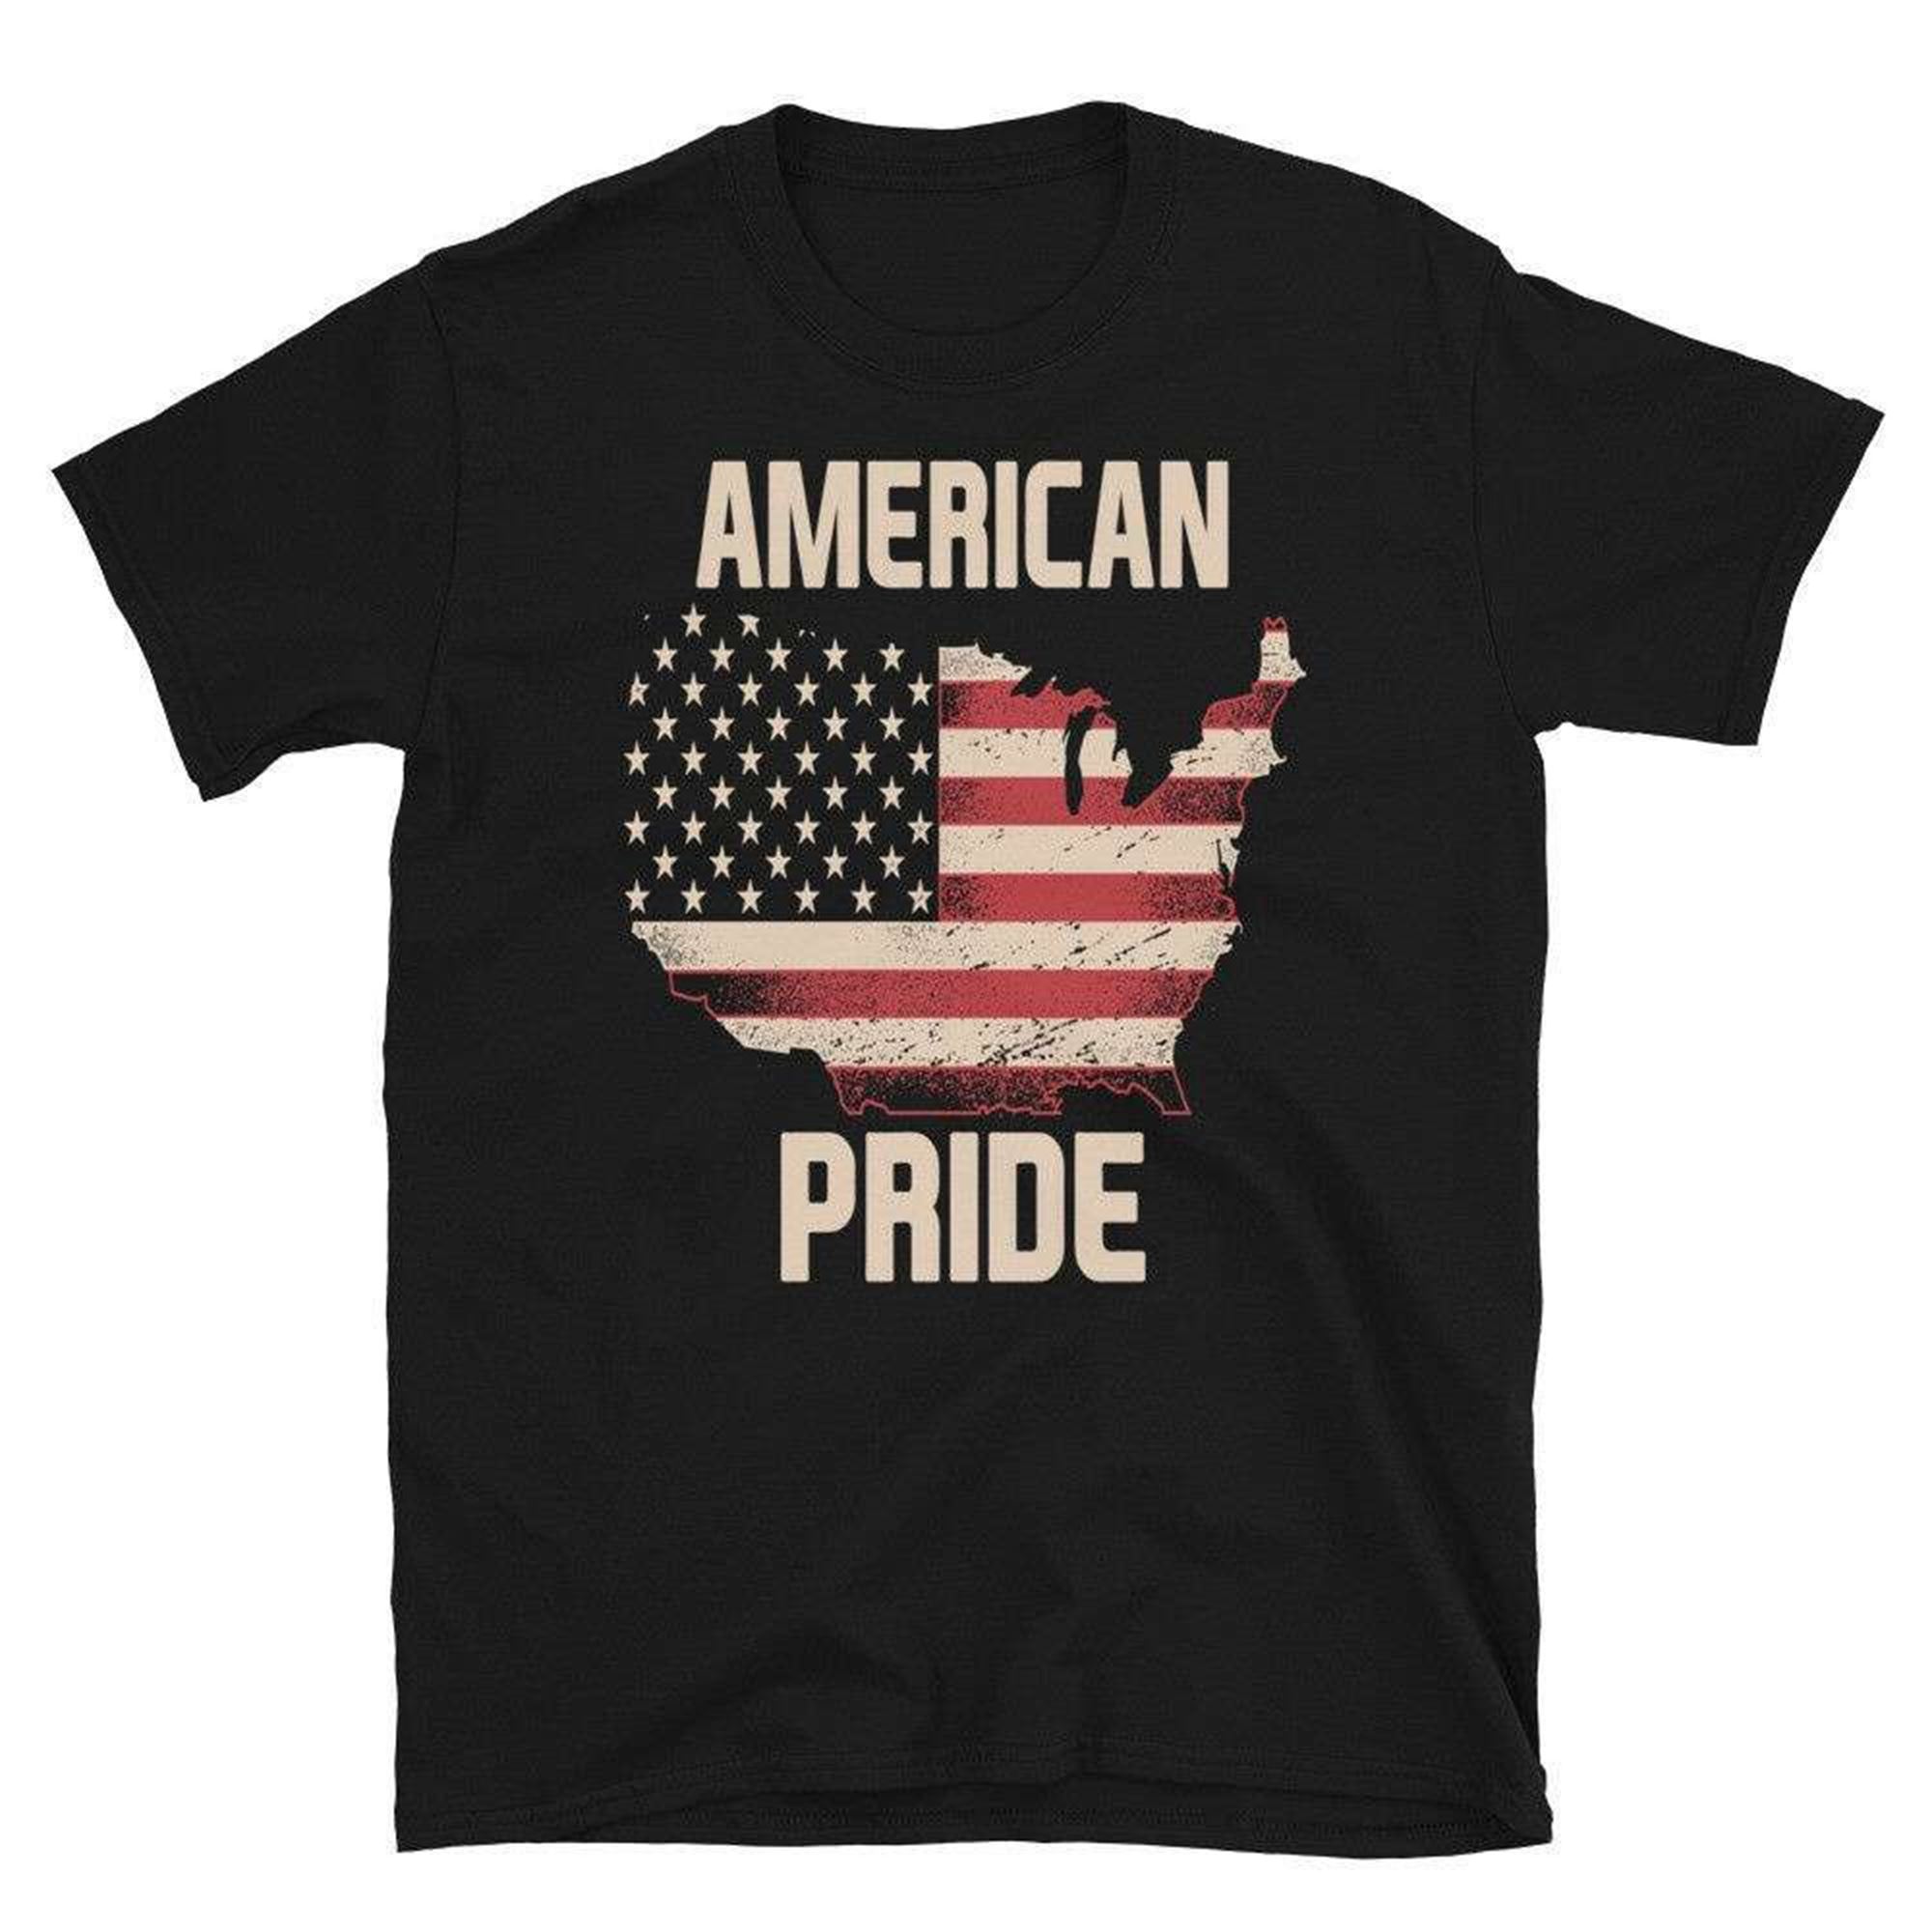 Patriot American Pride 2nd Amendment Diy Printed T-shirt Full Size Up To 5xl